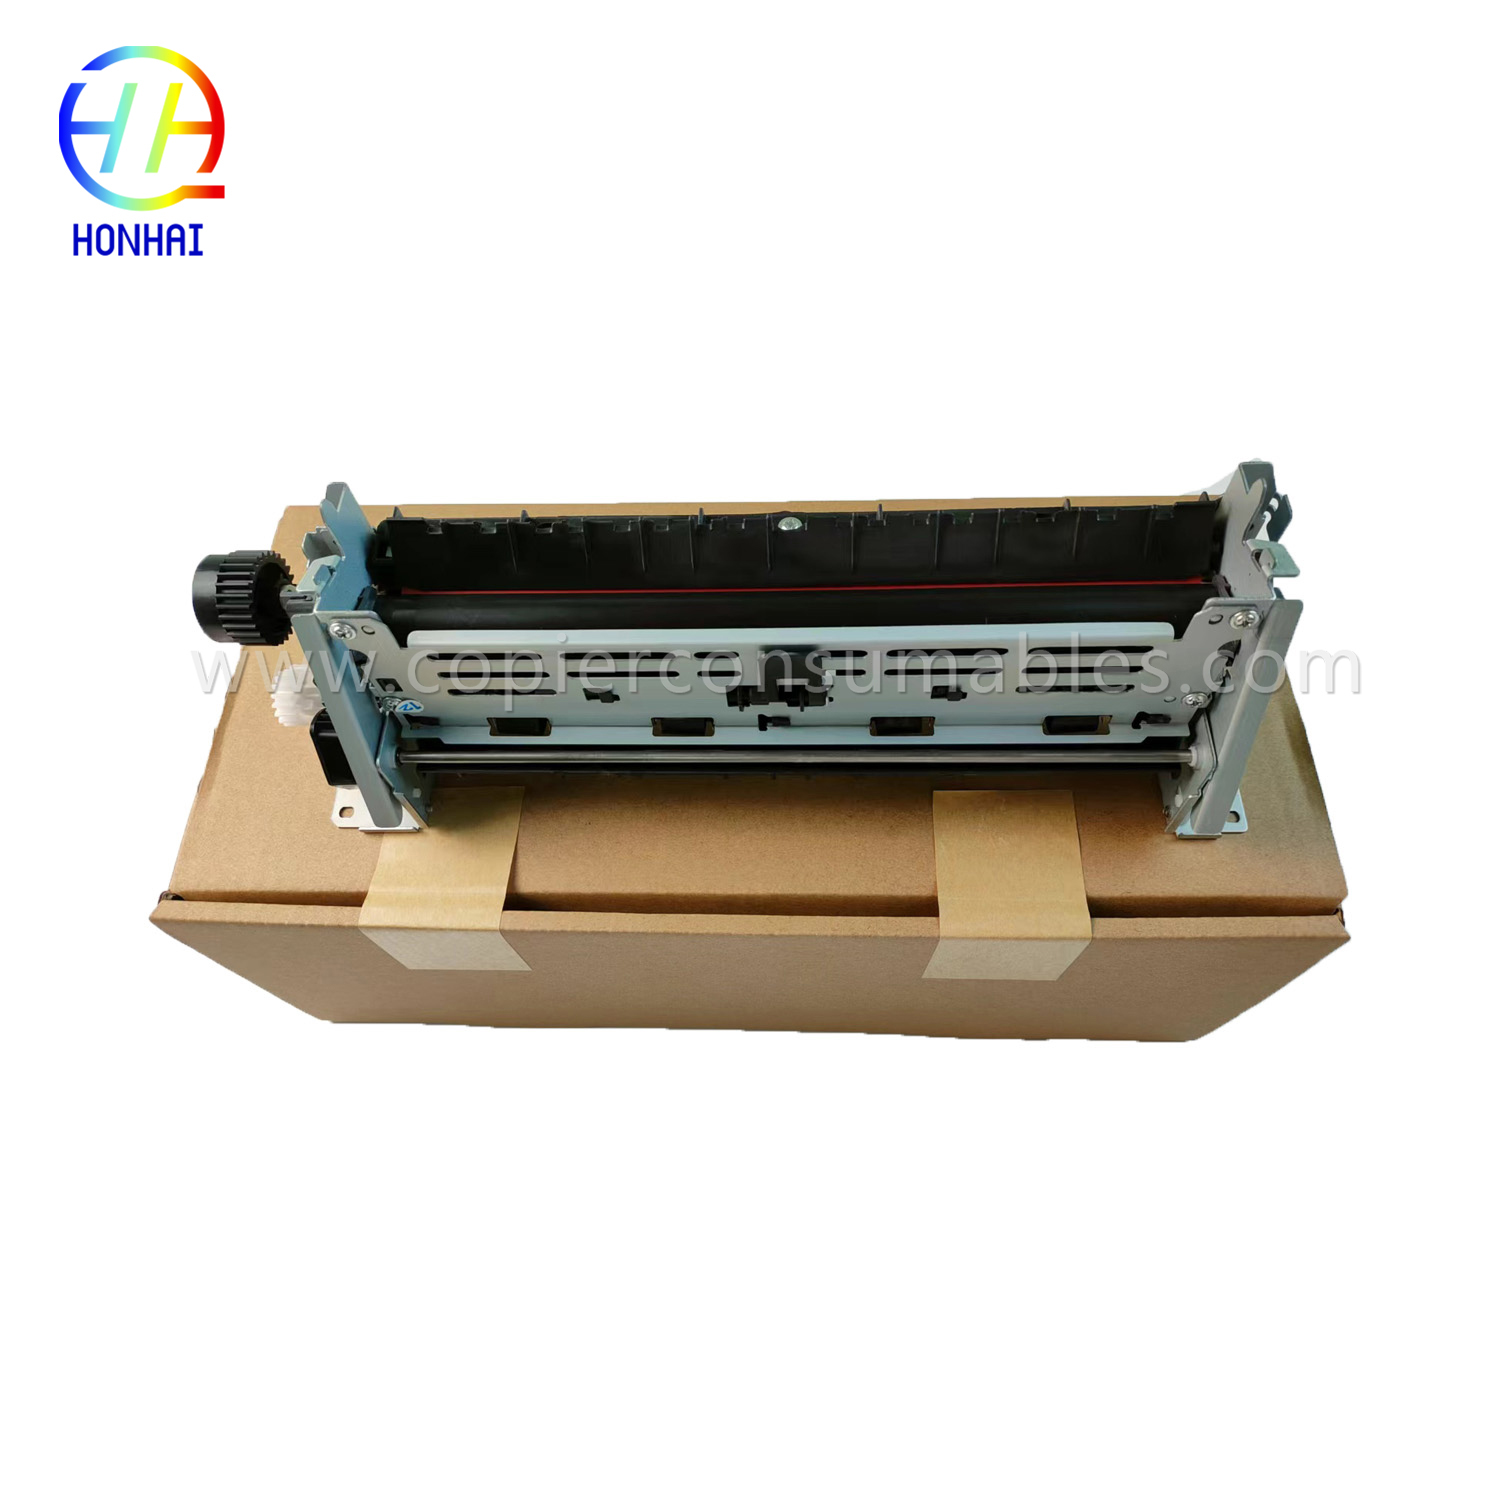 FUSSER FLIM UNIT for HP LaserJet Printer Pro 400 M401 M401DN M425 RM1-8809 RM1-8809-000CN Fuser Assembly 220 v (2).jpg-1 拷贝